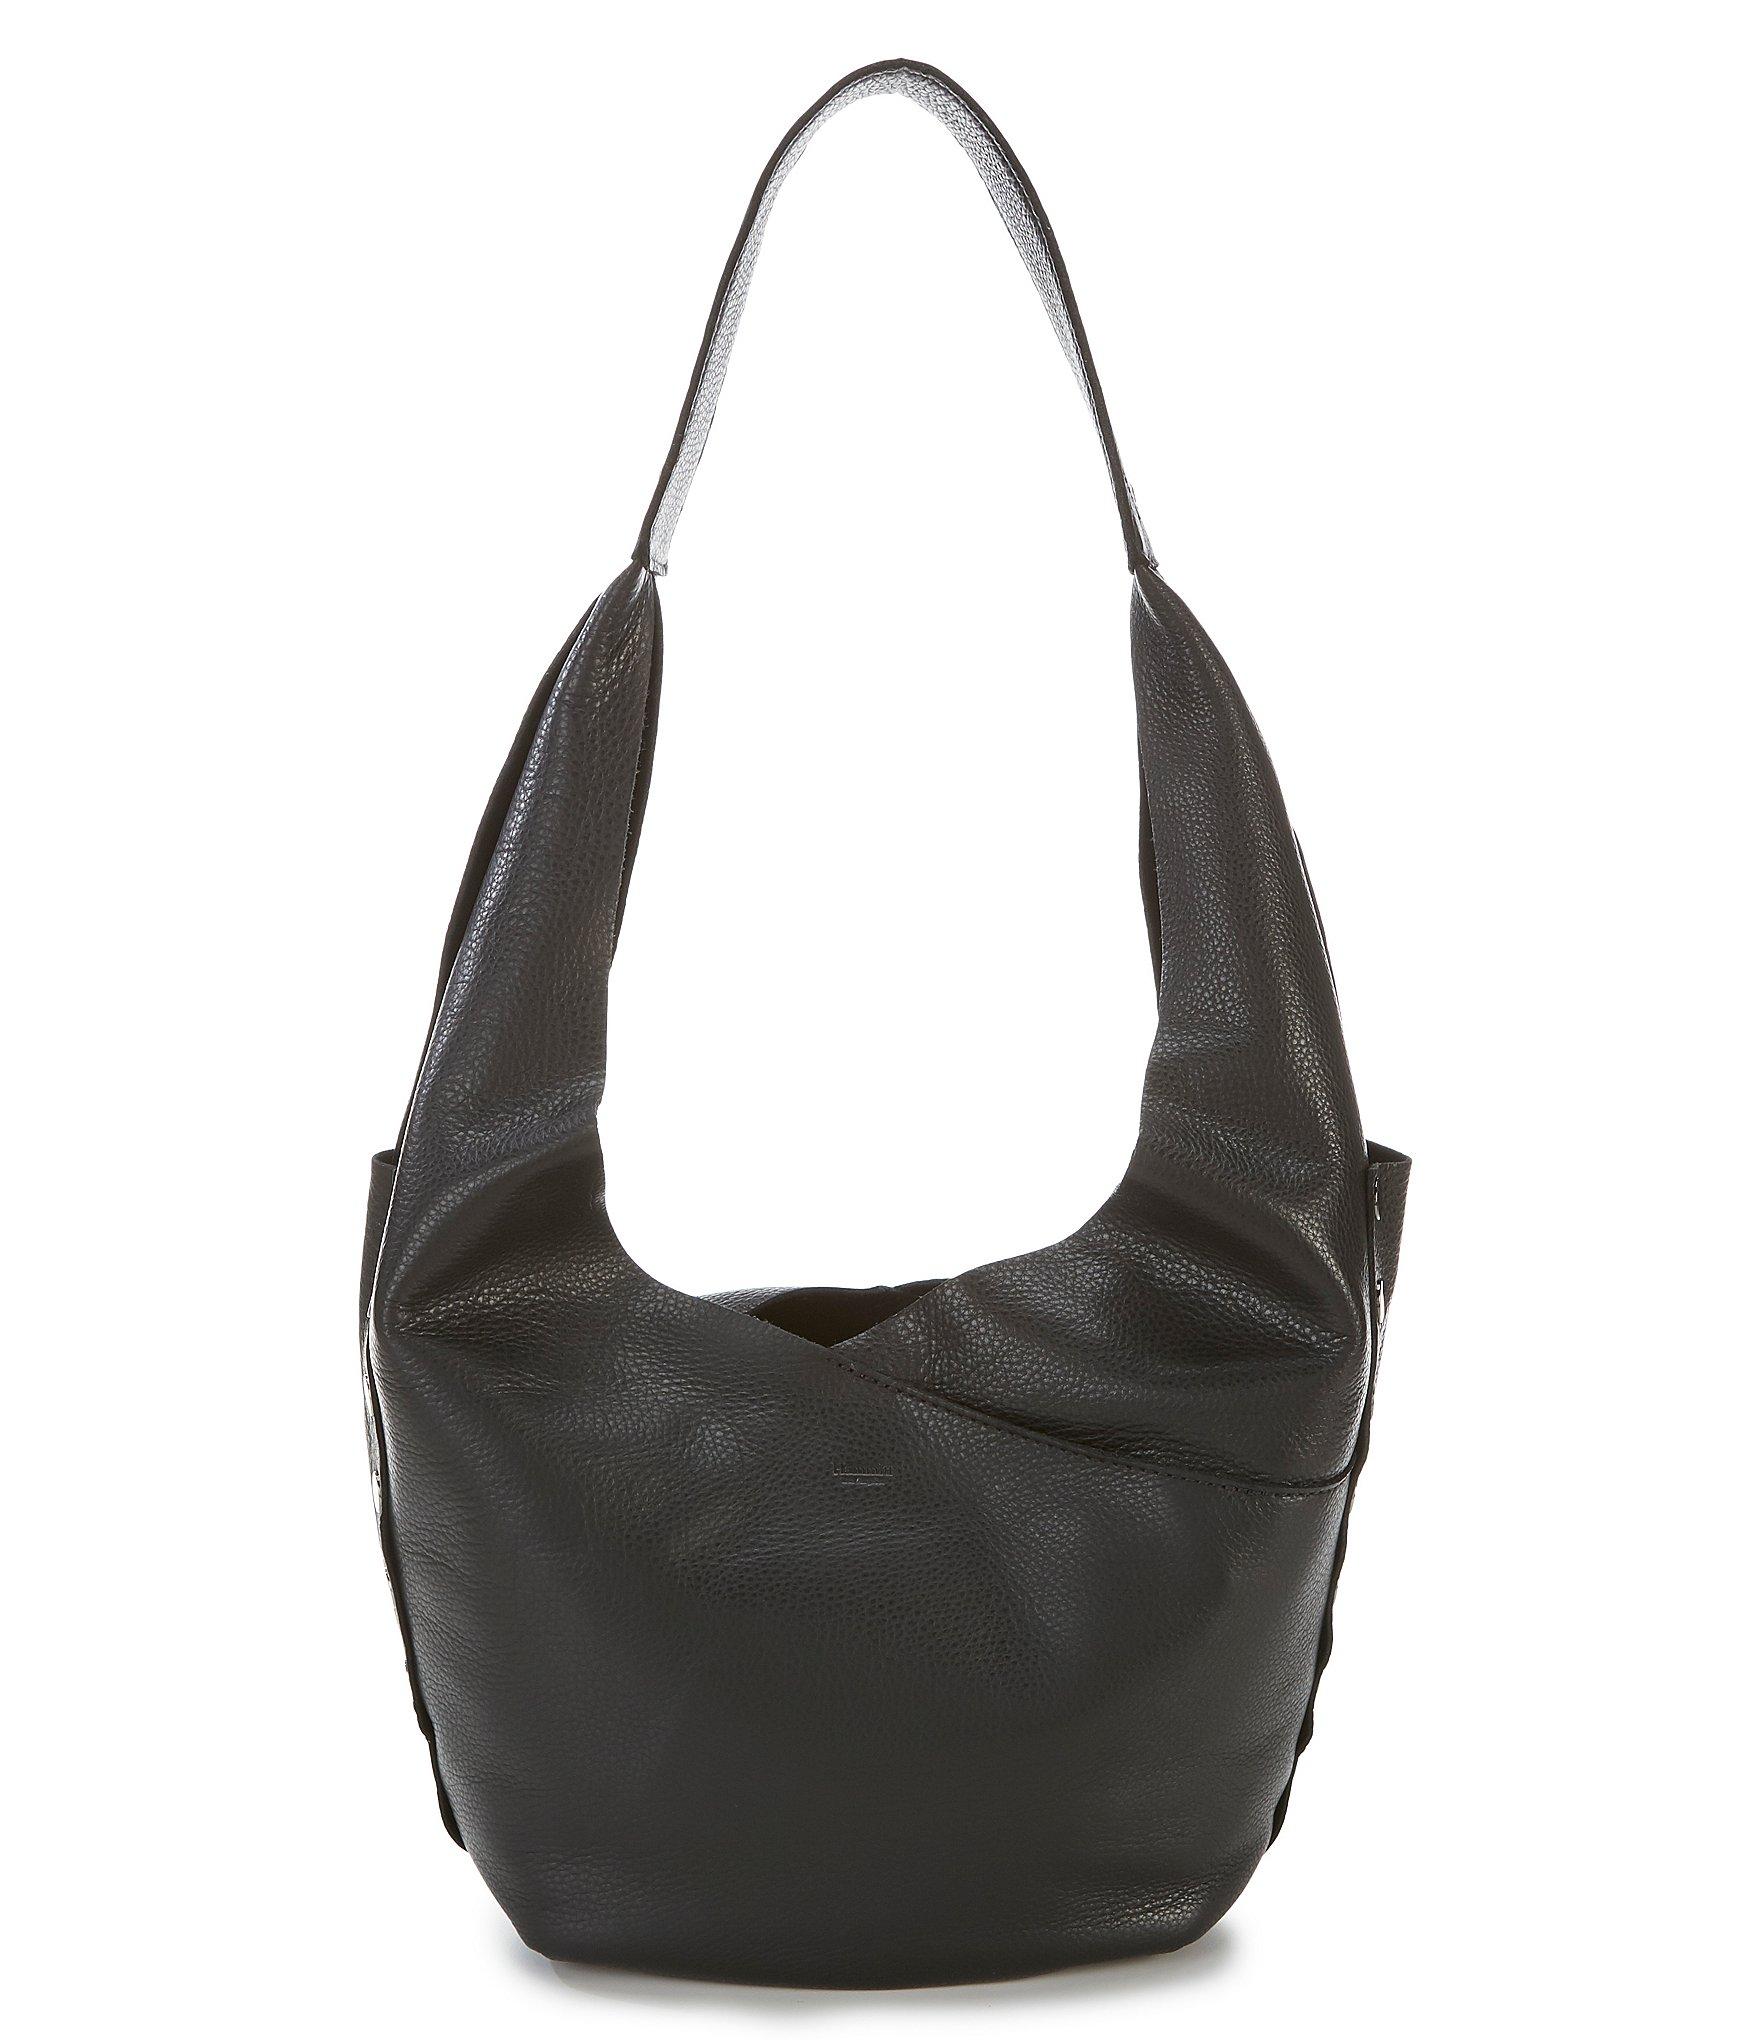 Hammitt Tom Snap Leather Hobo Bag in Black - Lyst